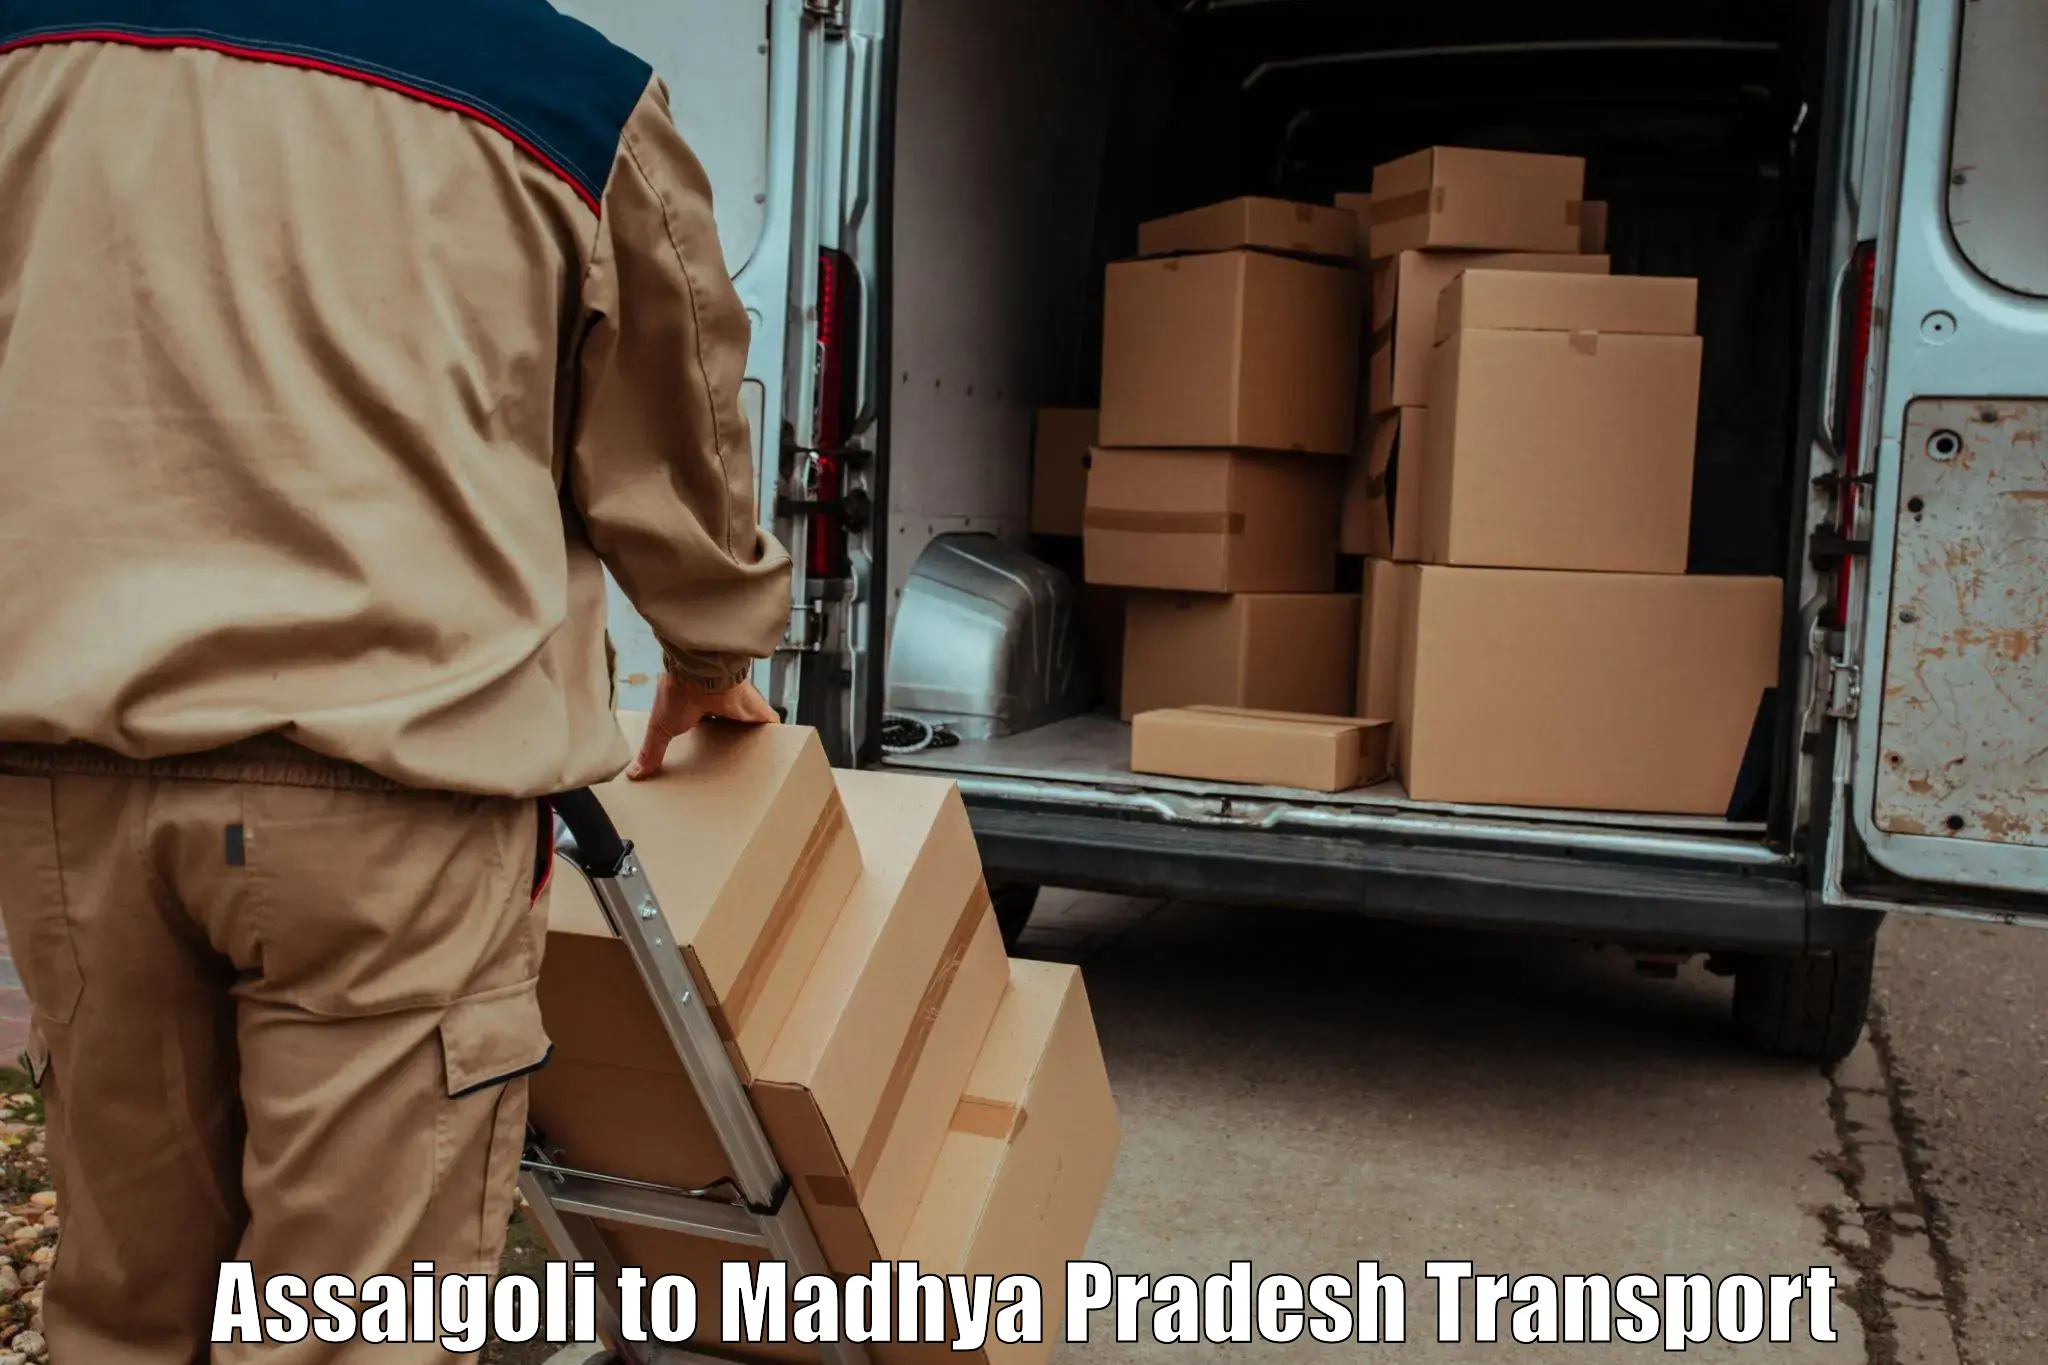 Pick up transport service Assaigoli to Raghogarh